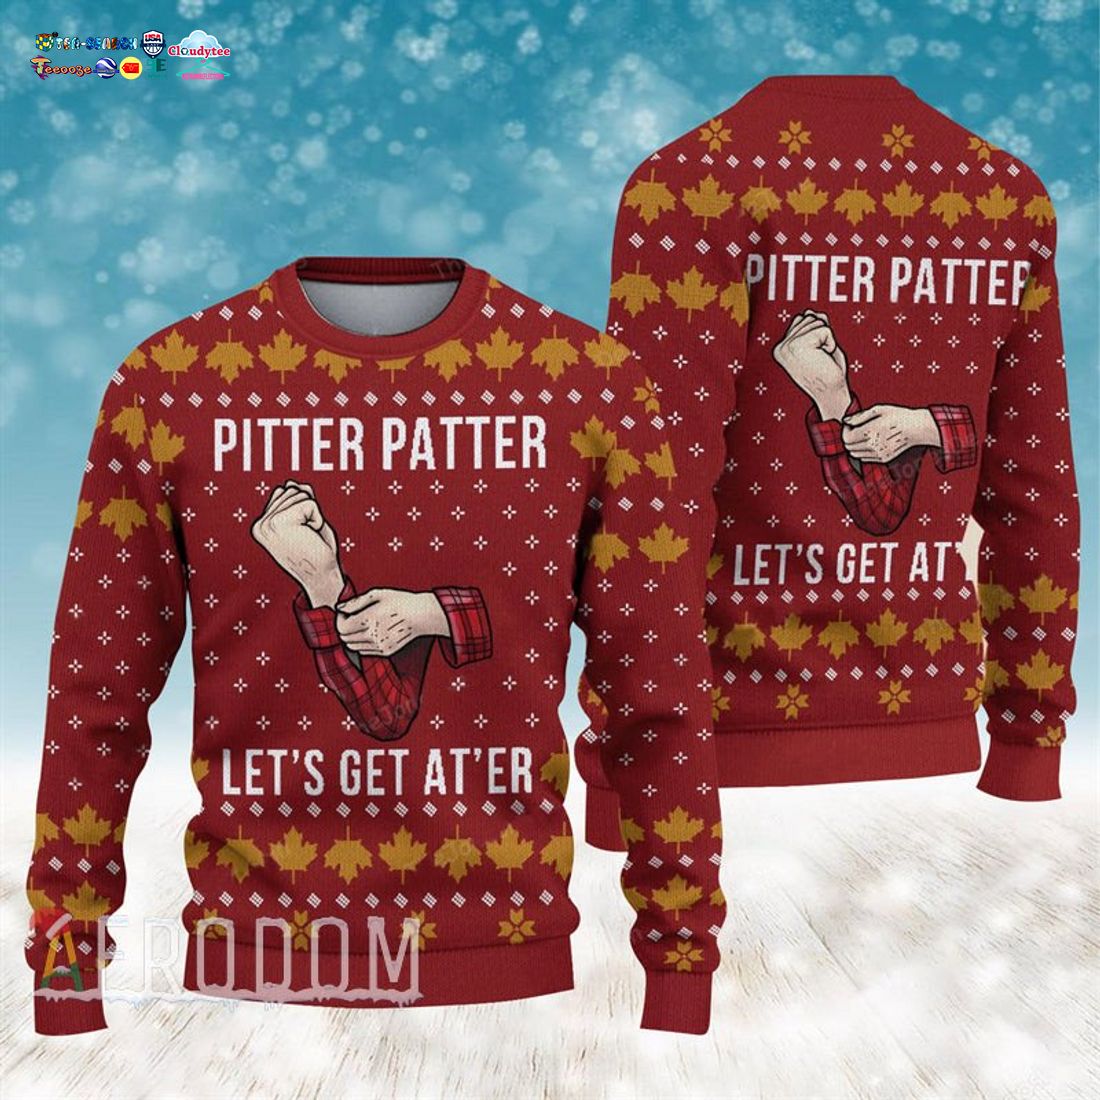 letterkenny-pitter-patter-lets-get-ater-ugly-christmas-sweater-1-CIlJm.jpg